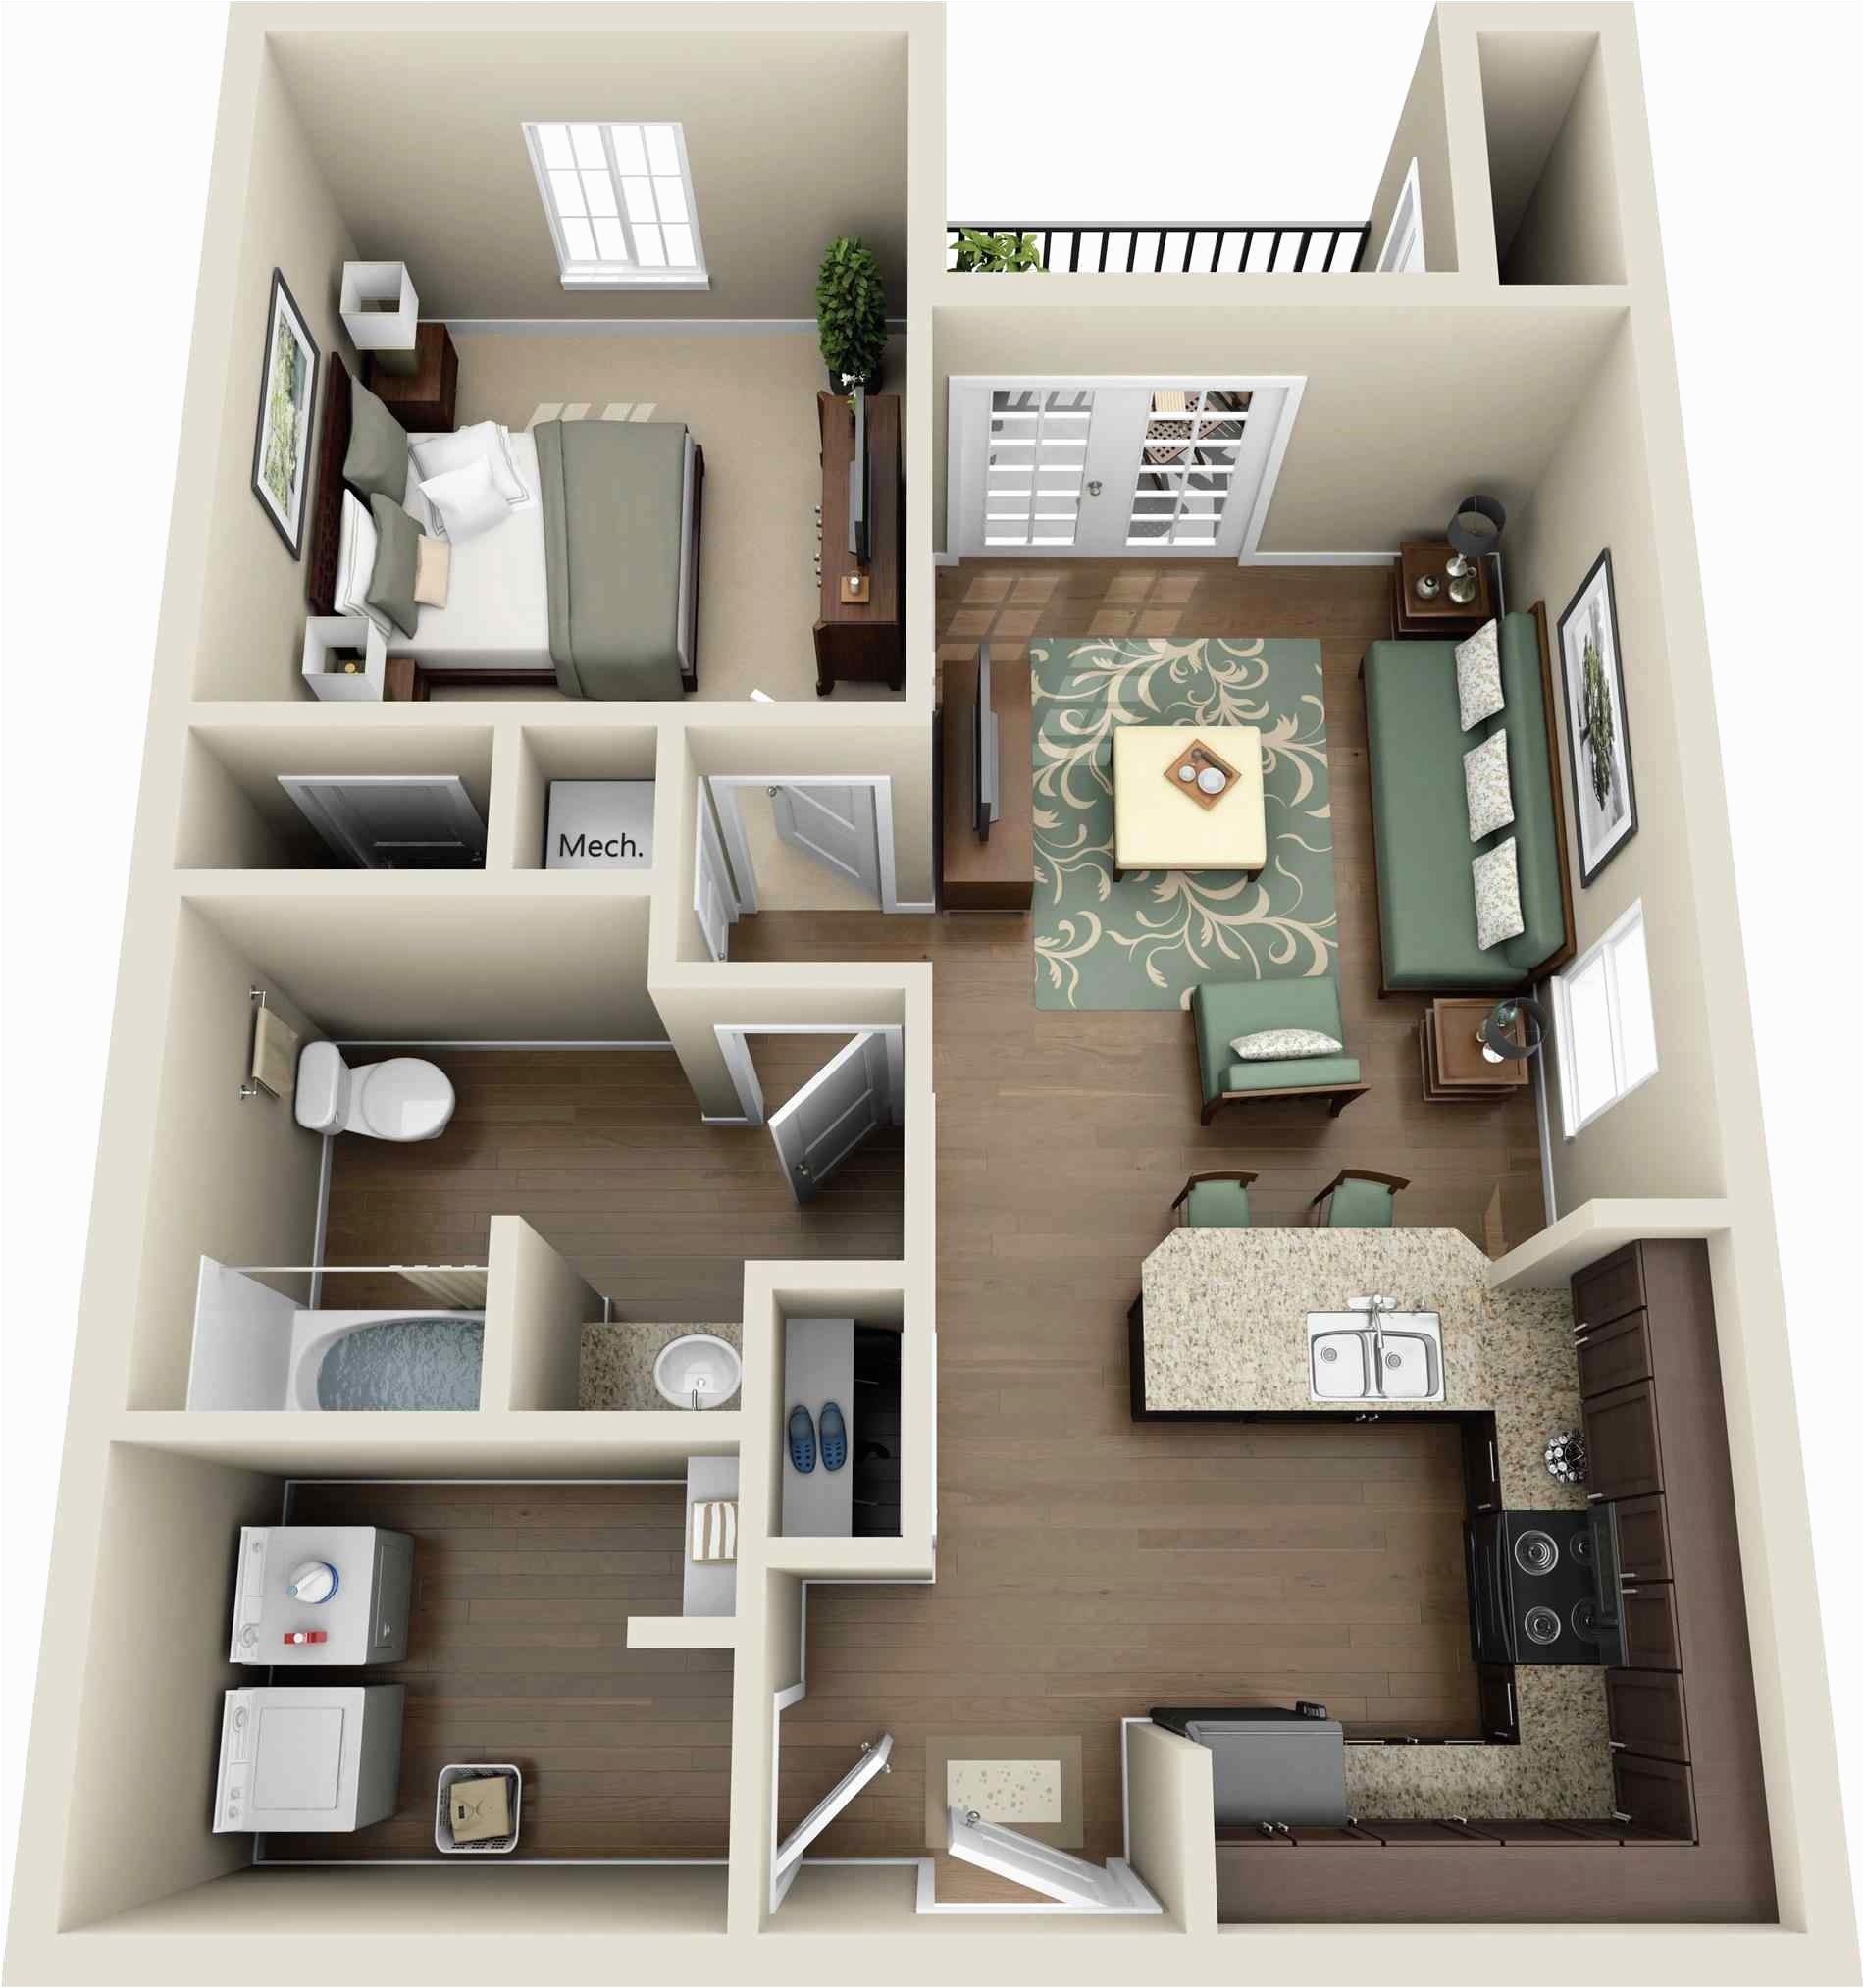 3 Bedroom Apartments West Wichita Ks Apartments with 3 Bedrooms Contemporary 3 Bedroom Apartments In